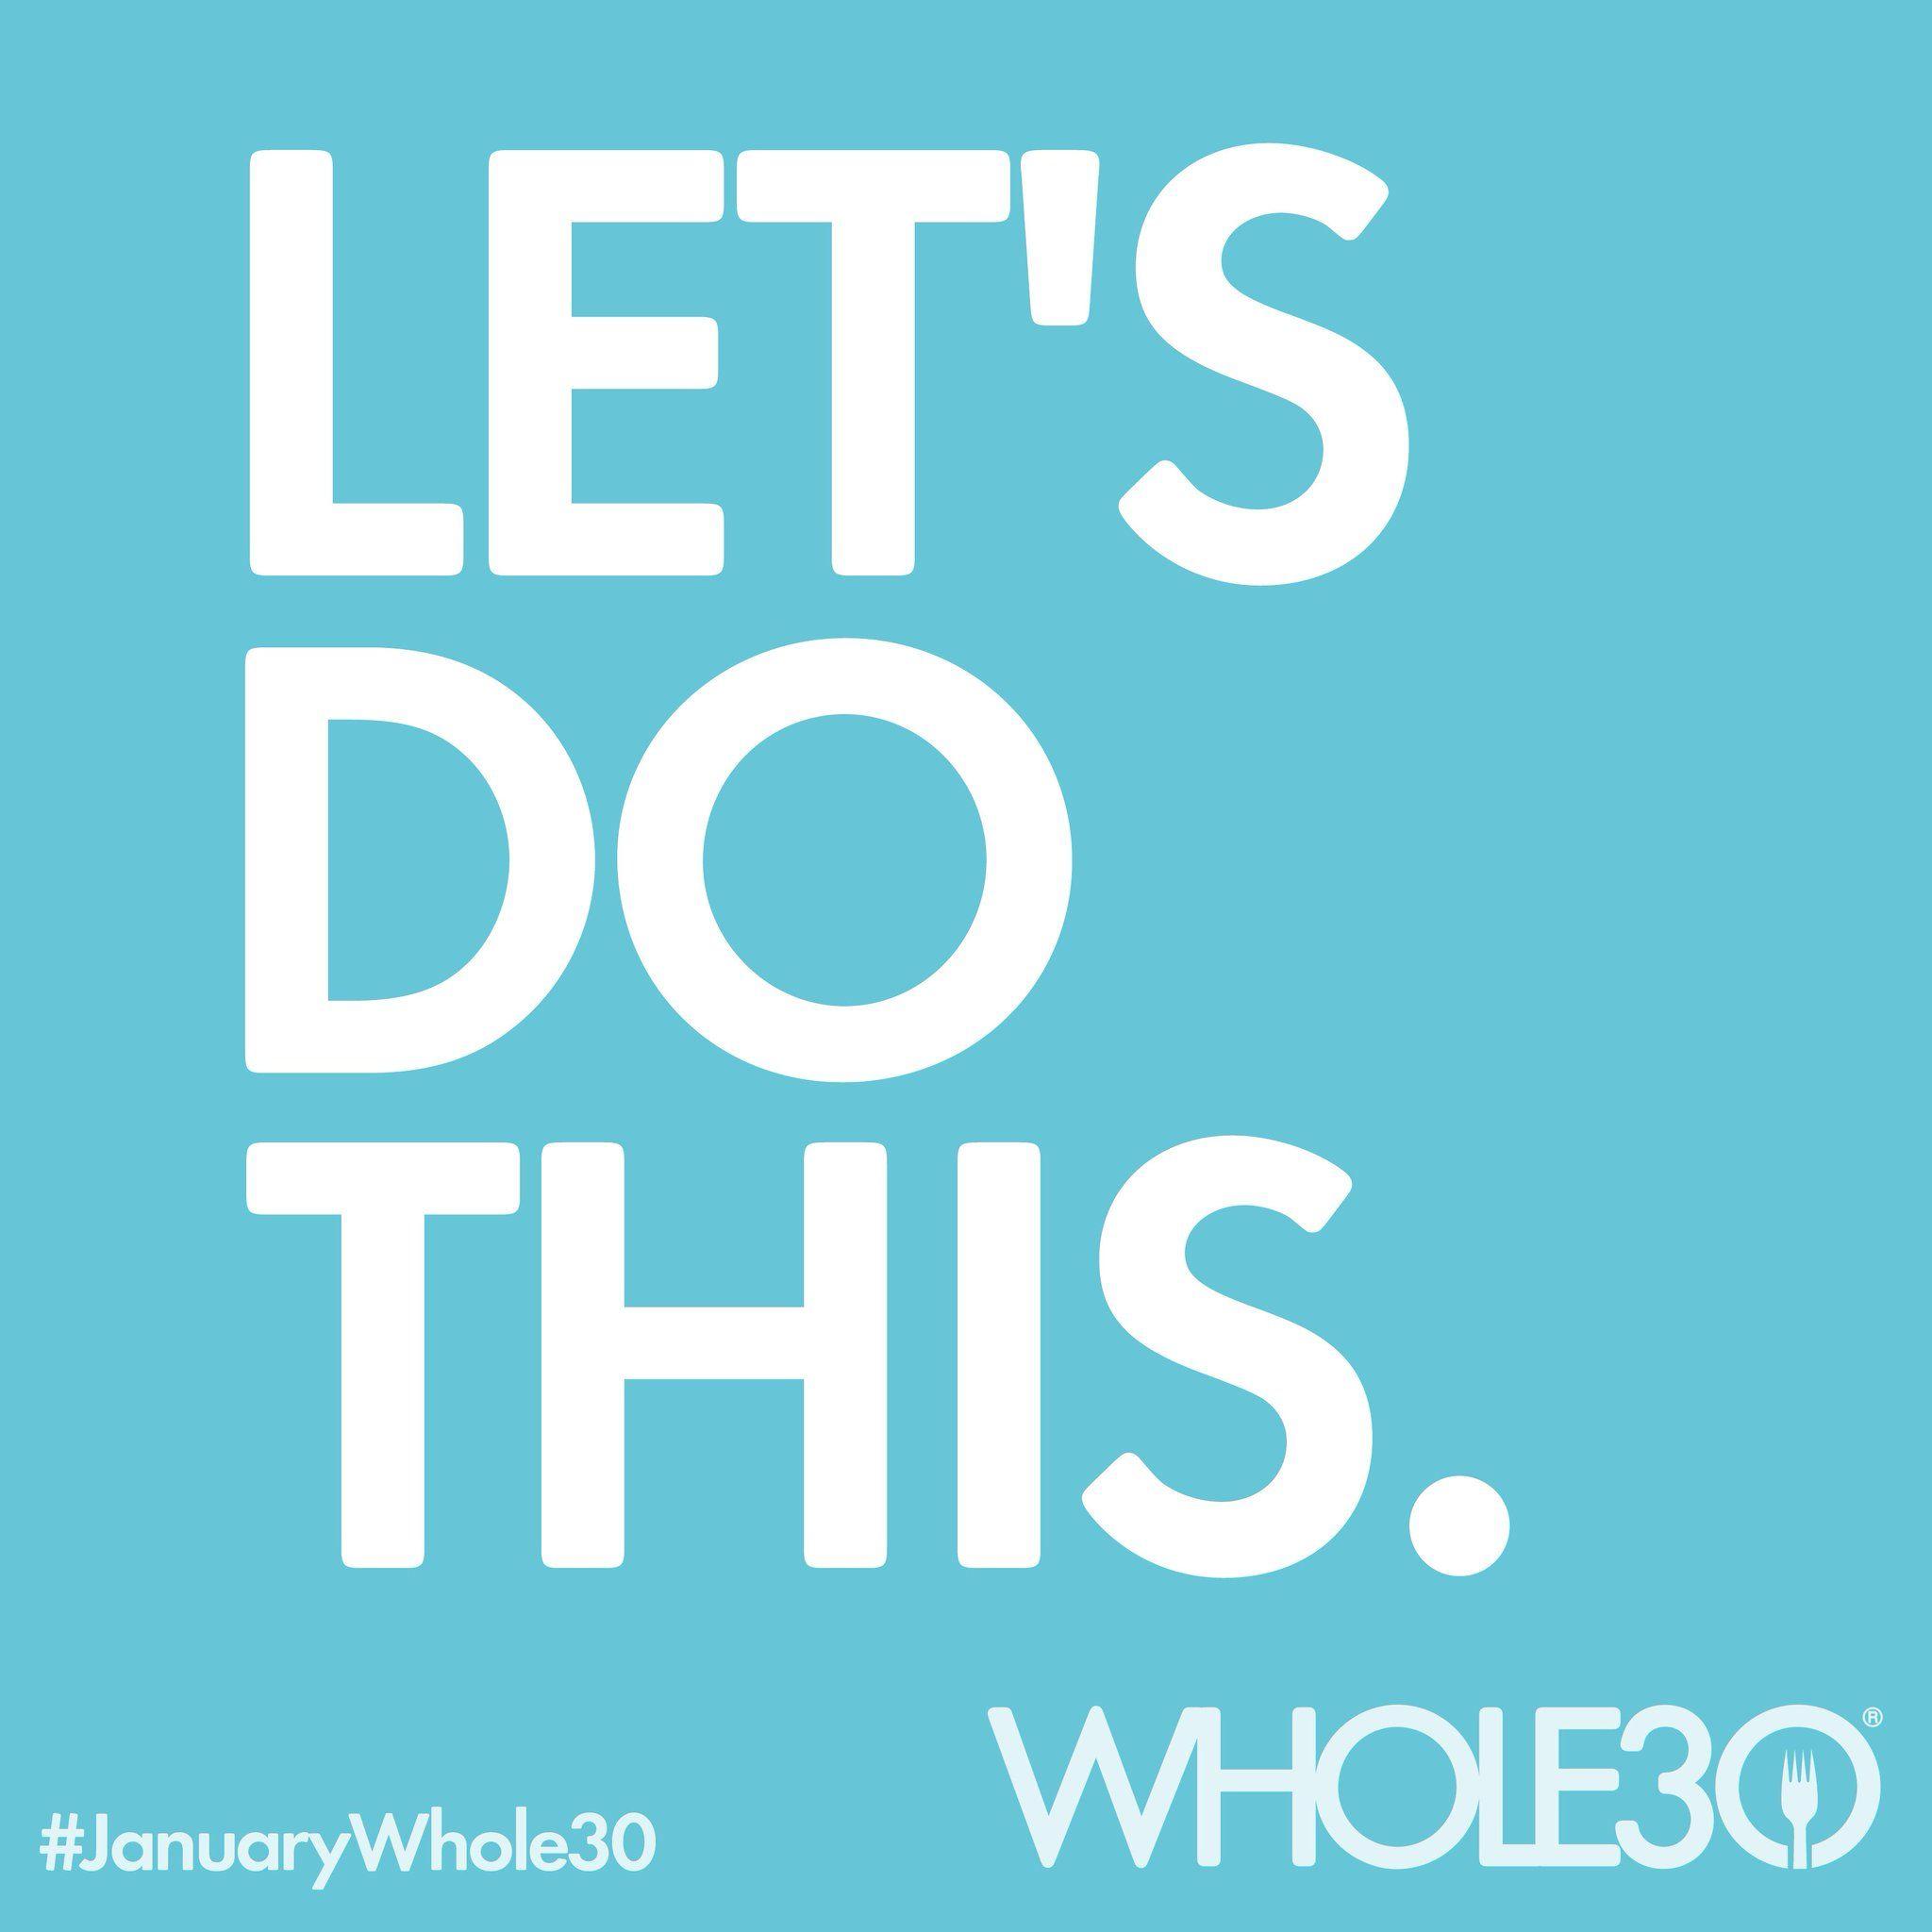 Whole30 Logo - Whole30® - #JanuaryWhole30 starts TOMORROW! Are you